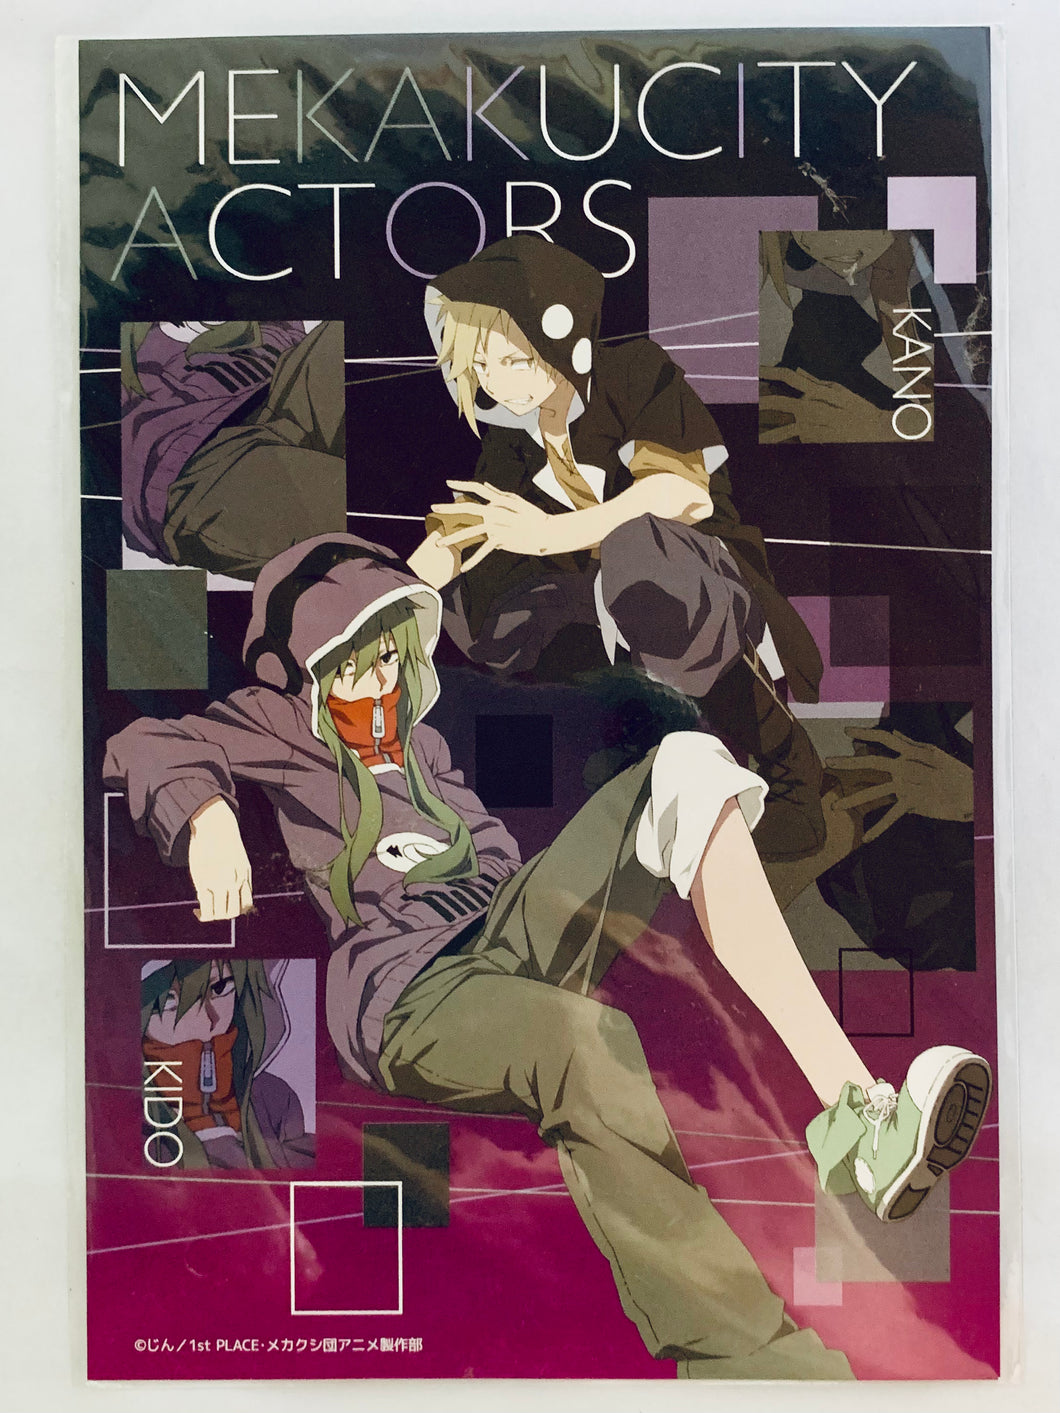 Mekakucity Actors x Lawson - Kido & Kano - Original Postcard - Sweets Campaign